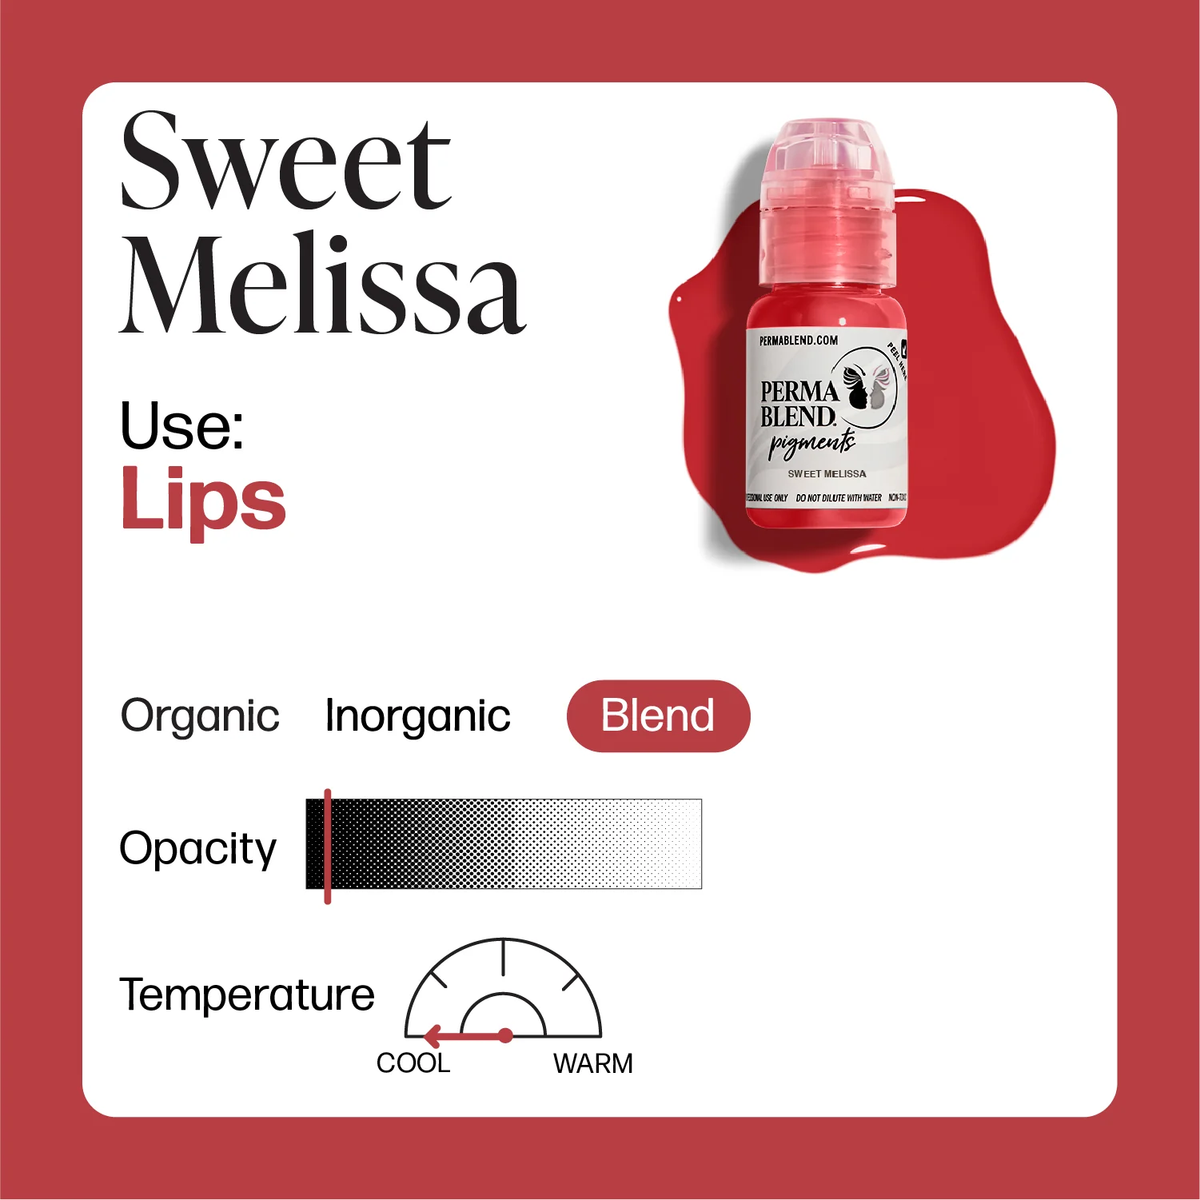 Sweet Melissa - Perma Blend Pigment